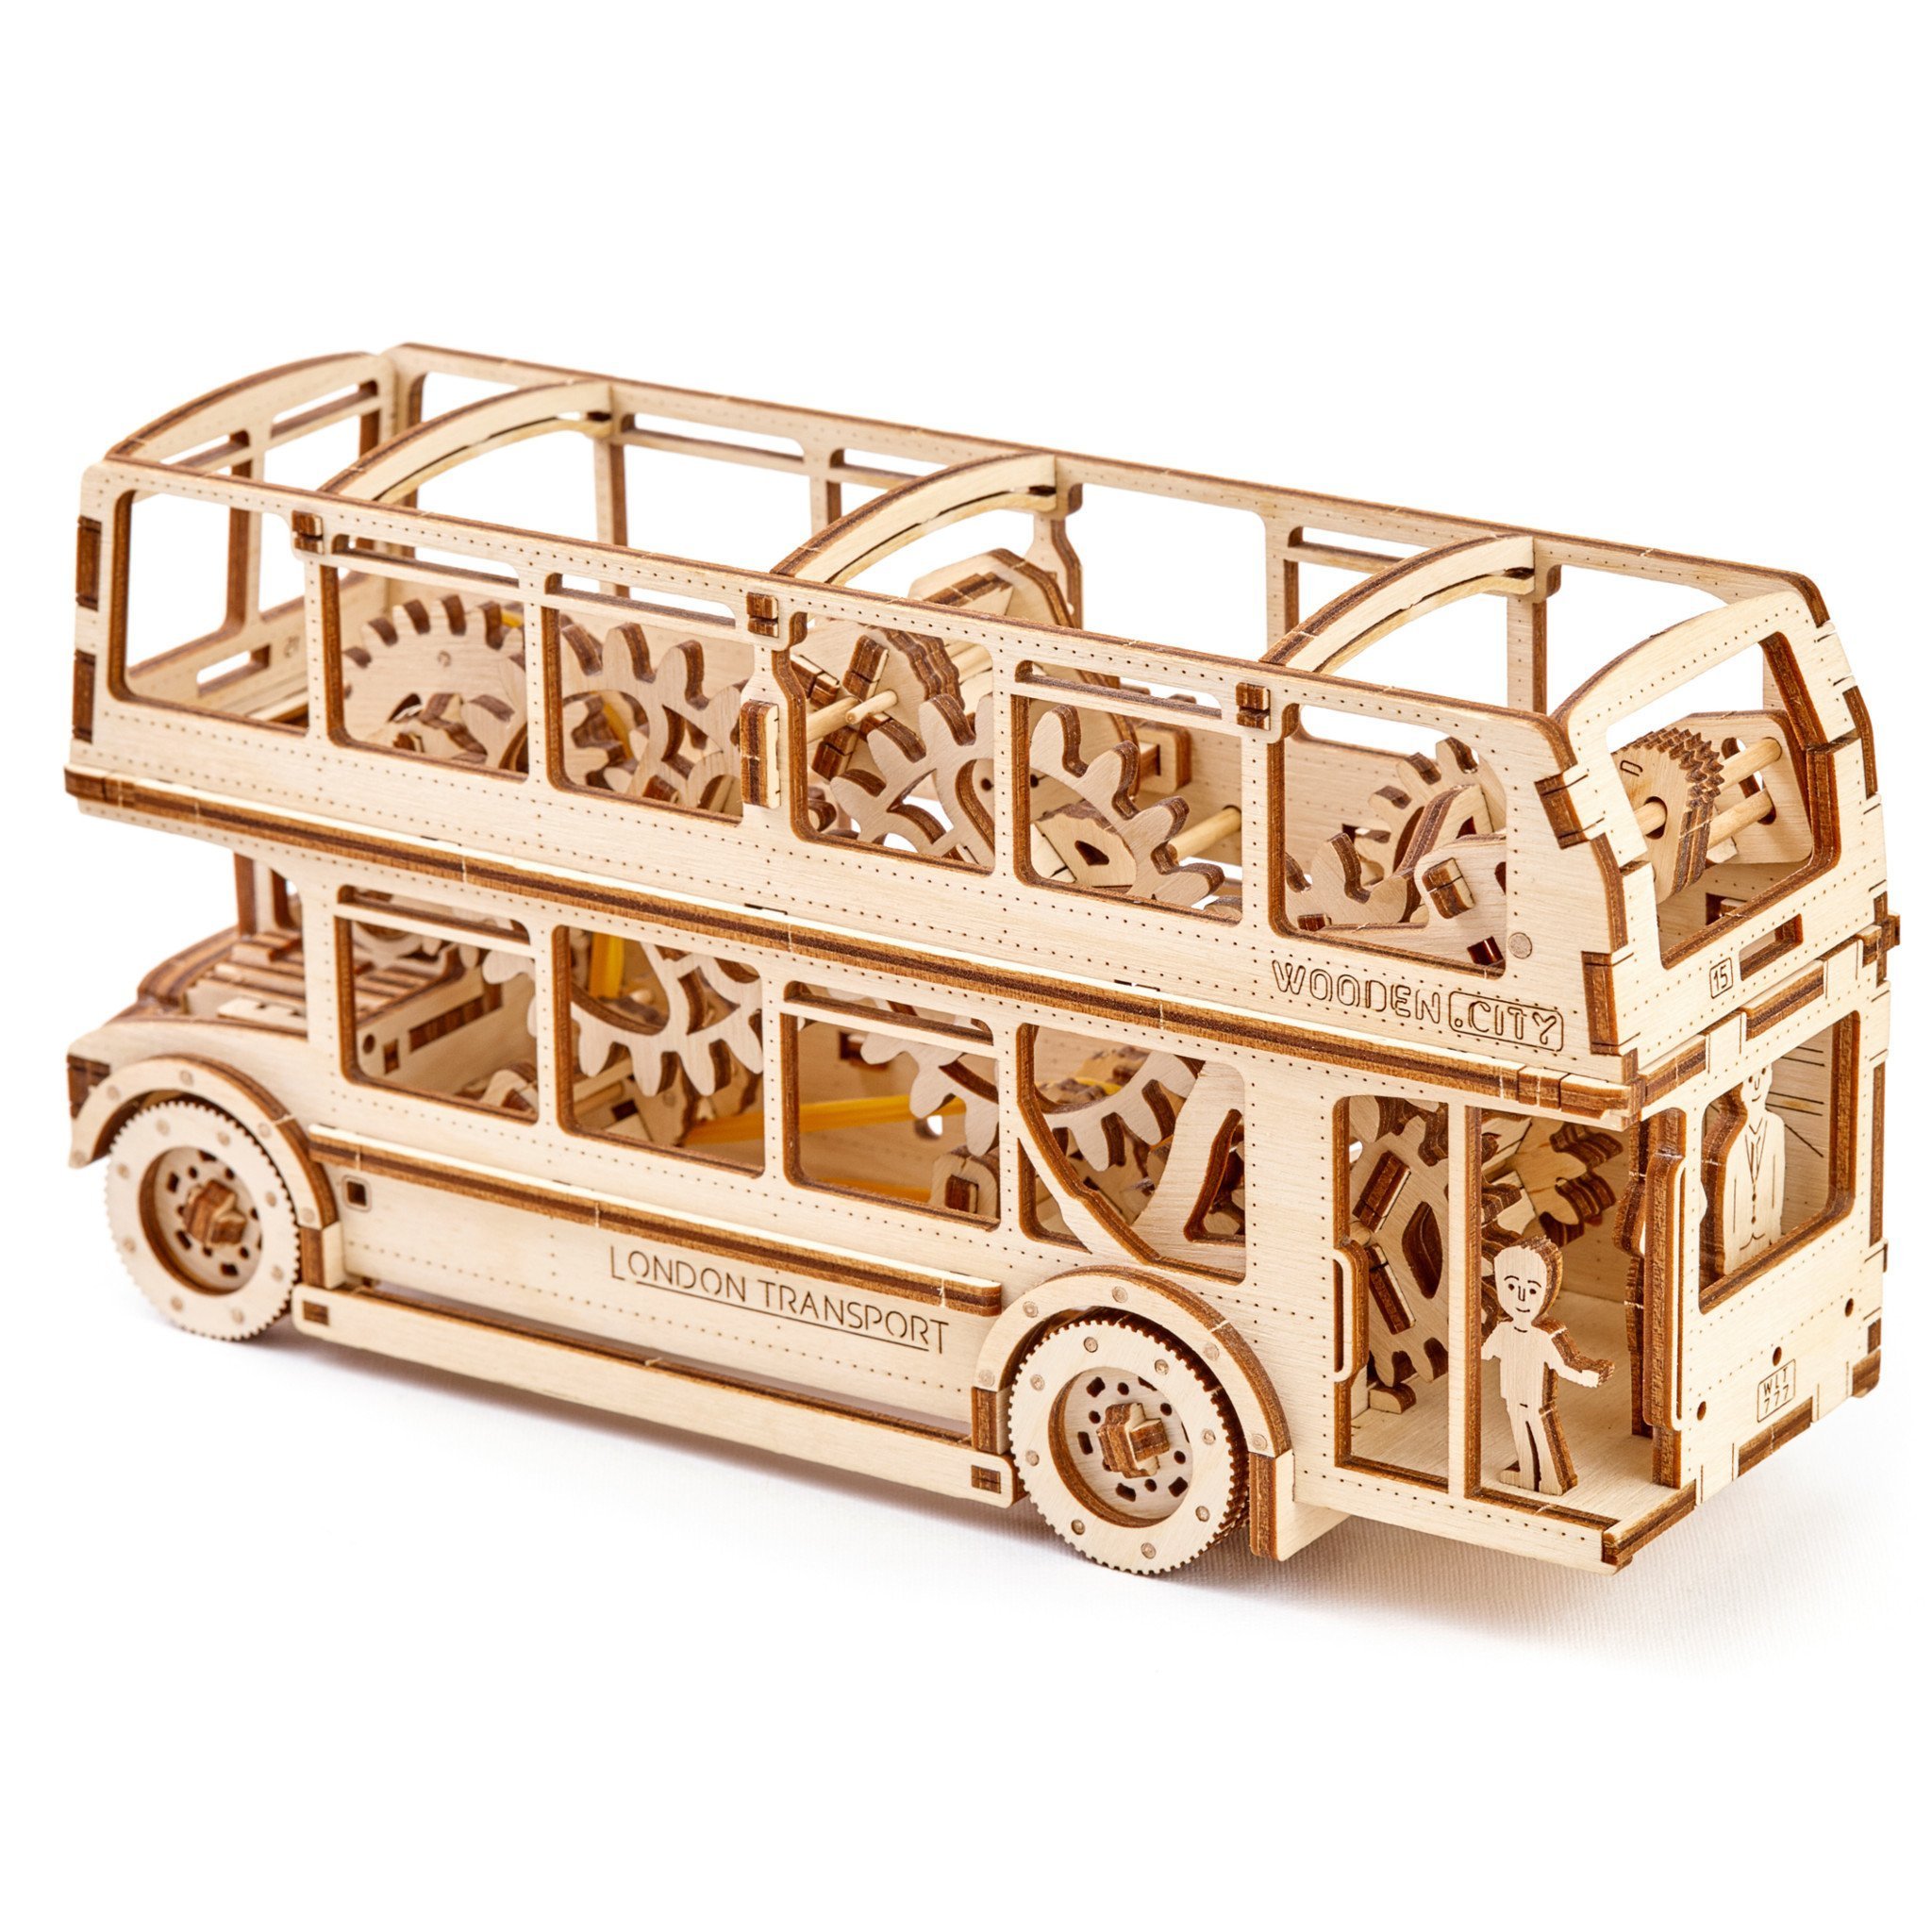 bus londinese kit in legno con movimento